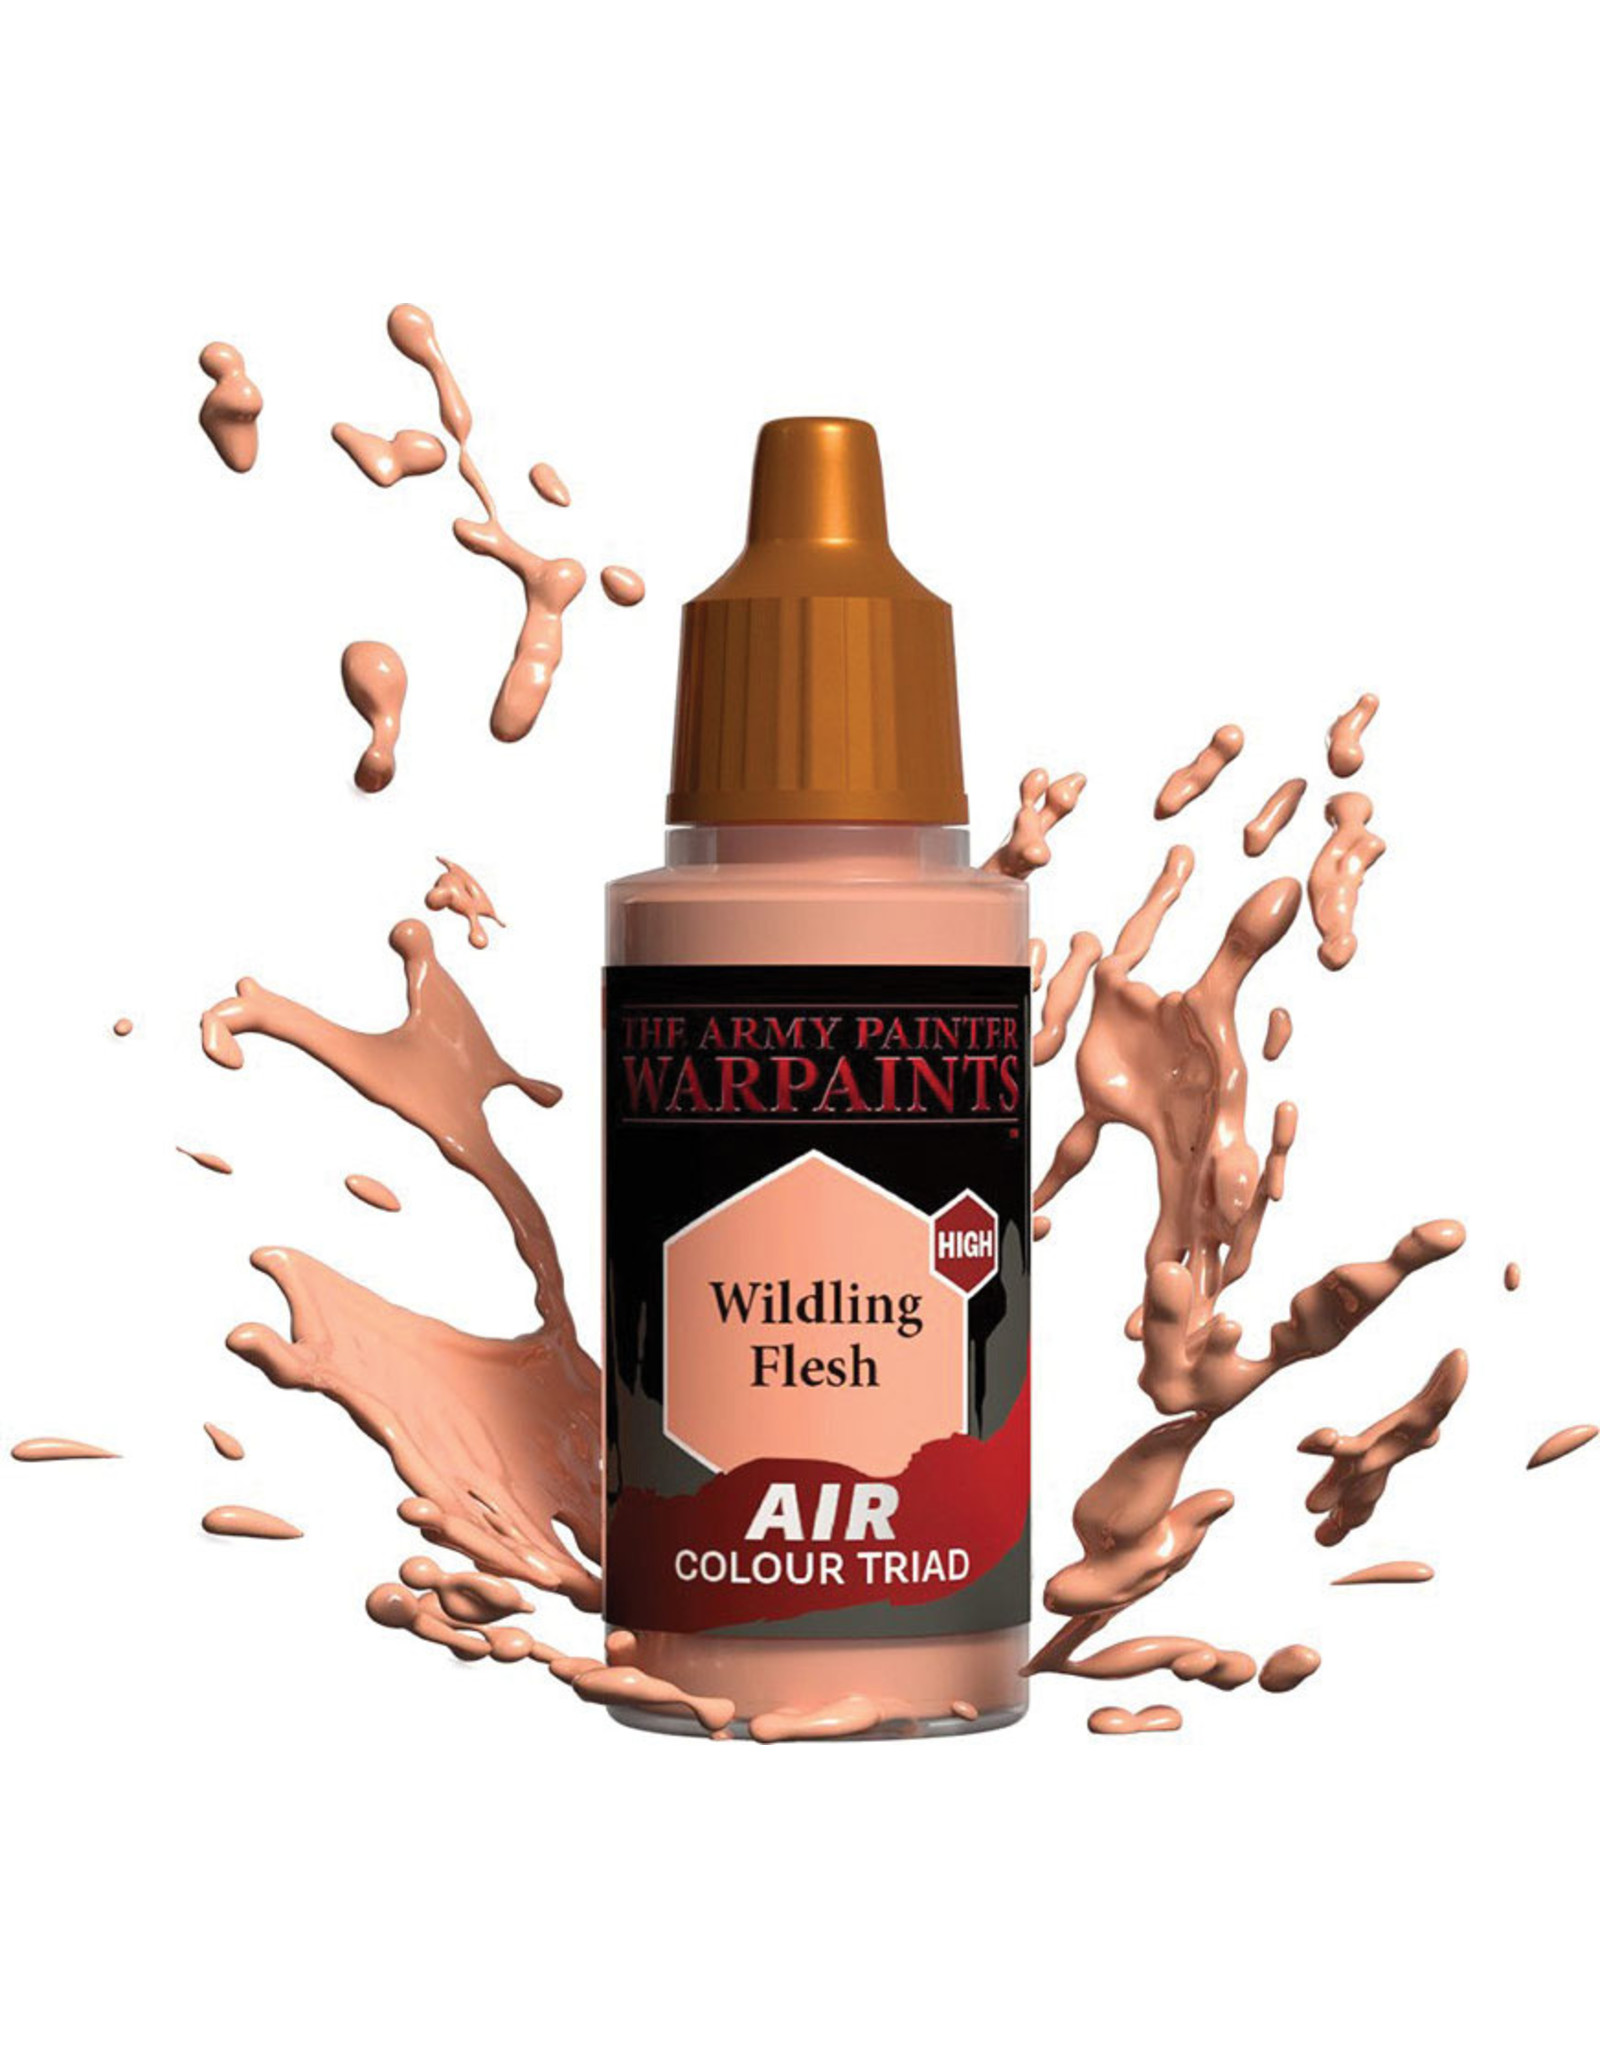 Army Painter Warpaint Air: Wildling Flesh, 18ml.